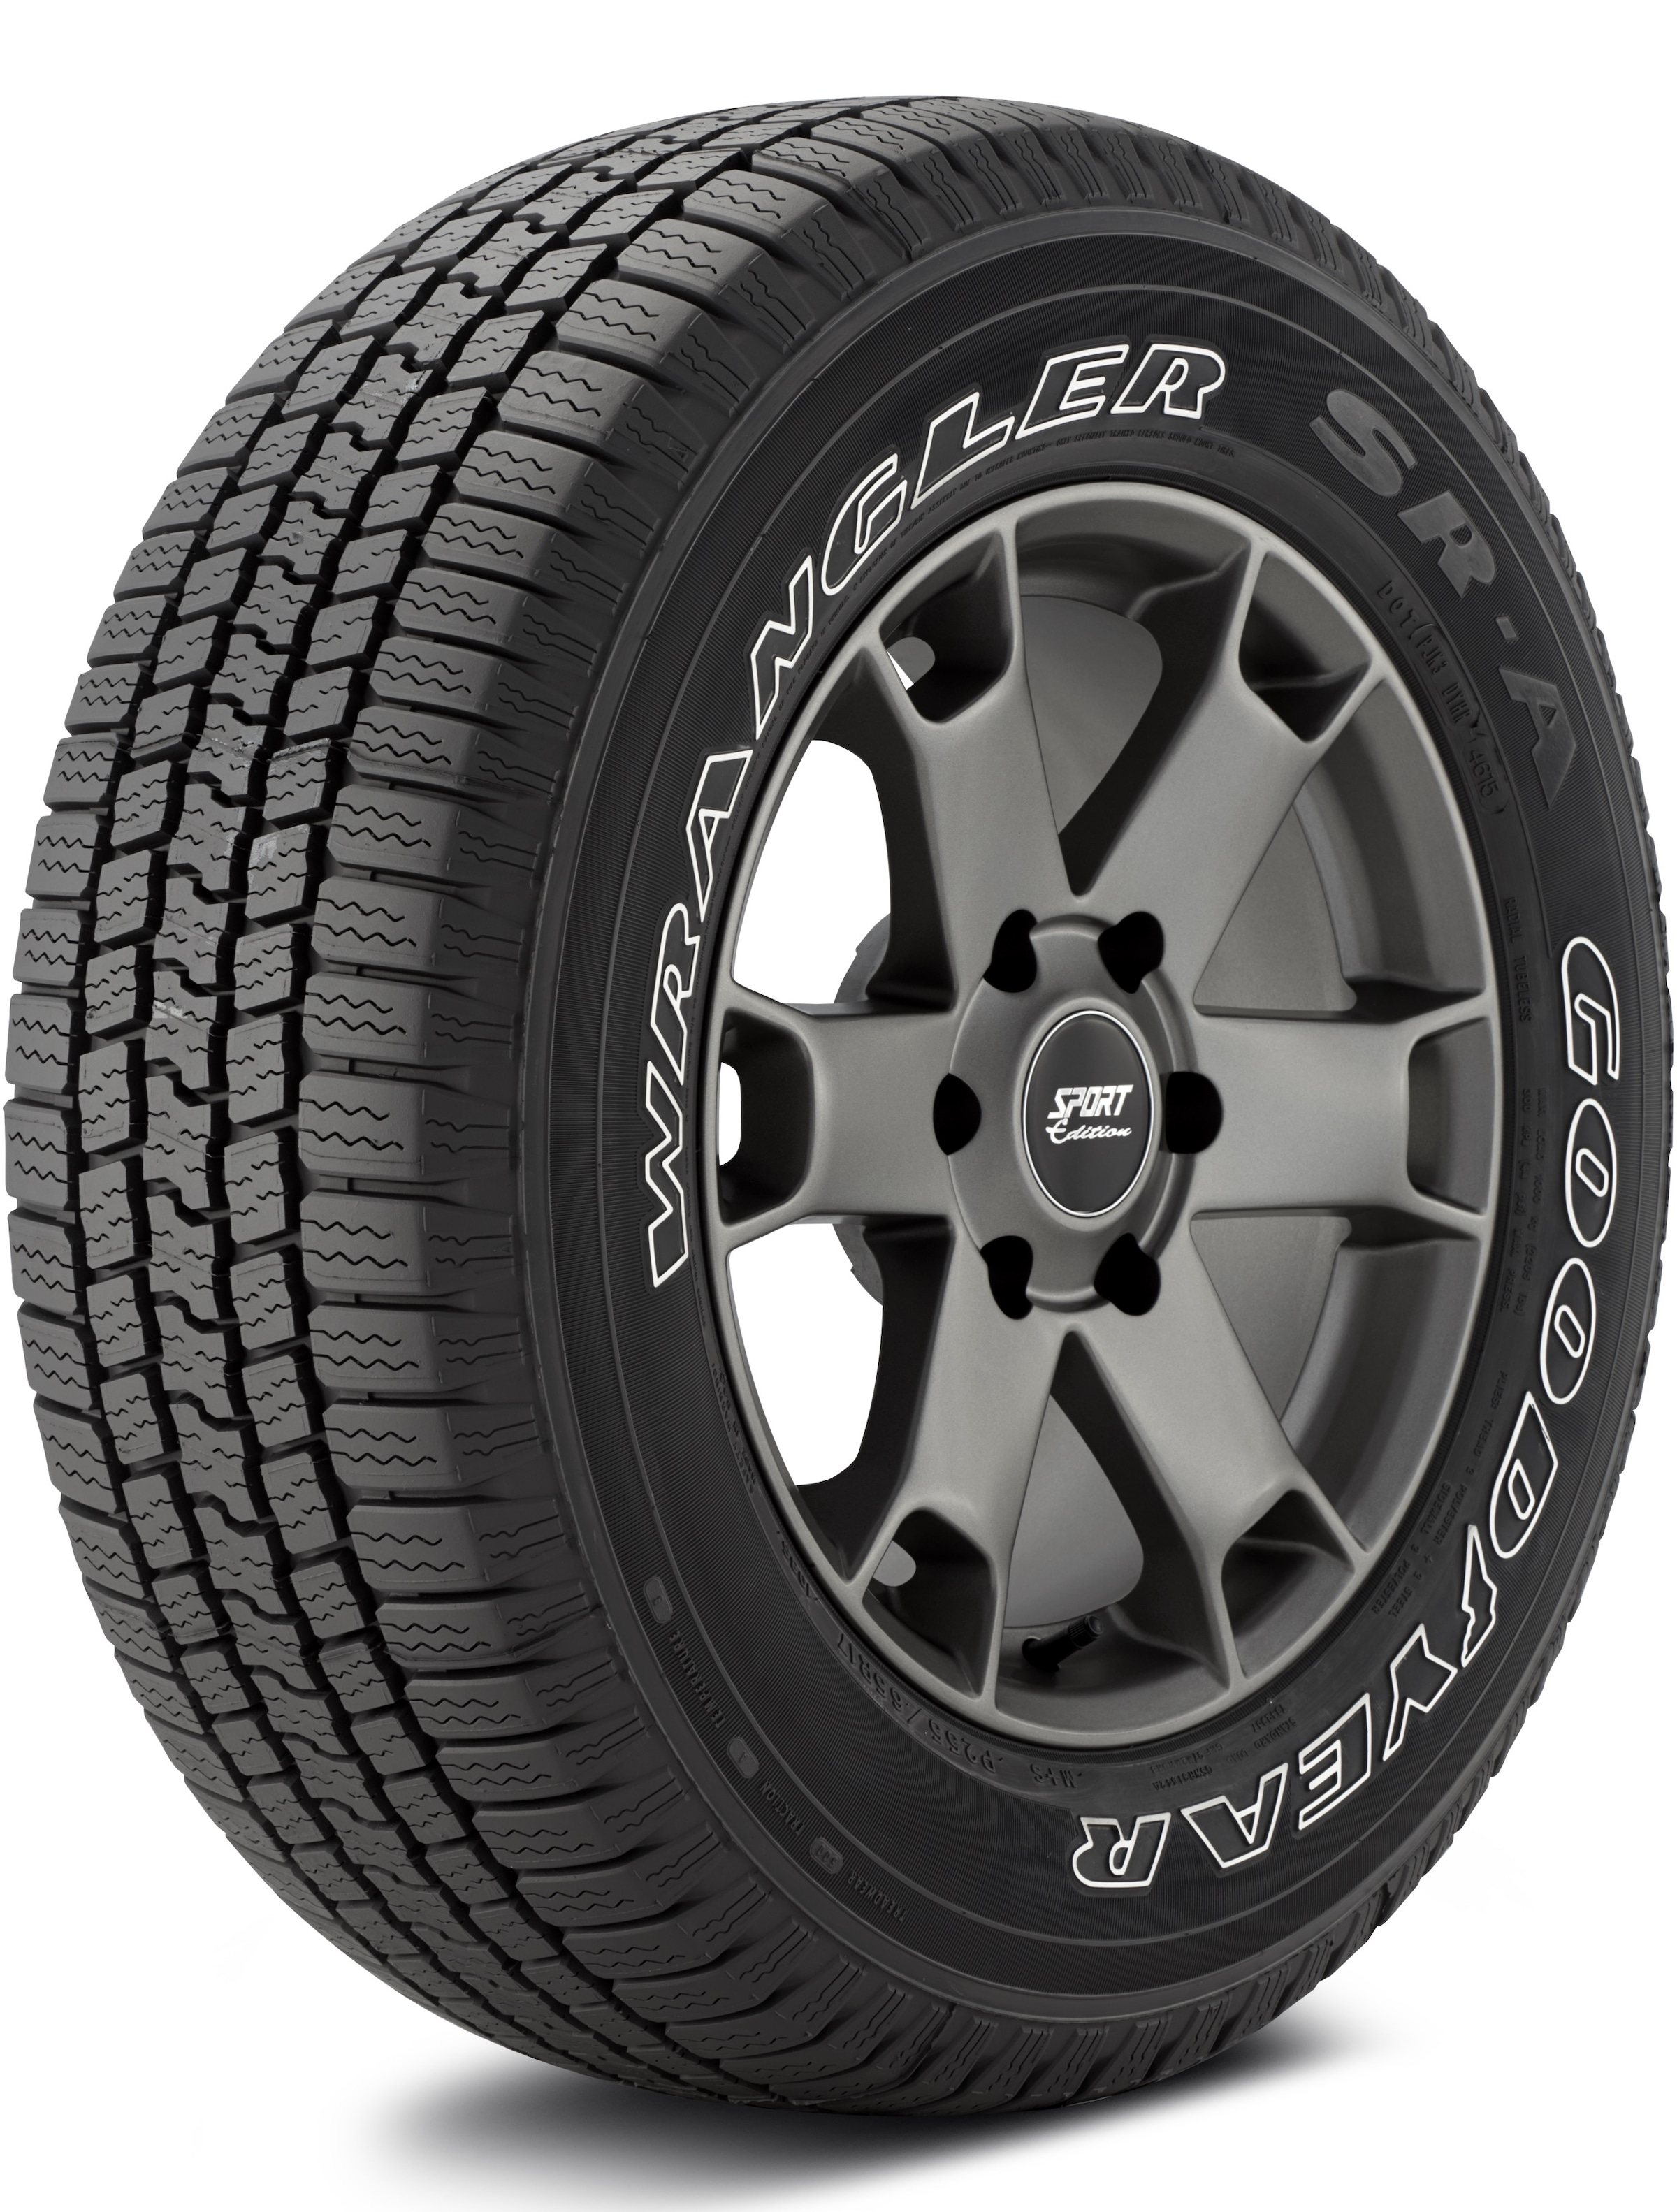 Goodyear Wrangler SR-A Highway All-Season Tire